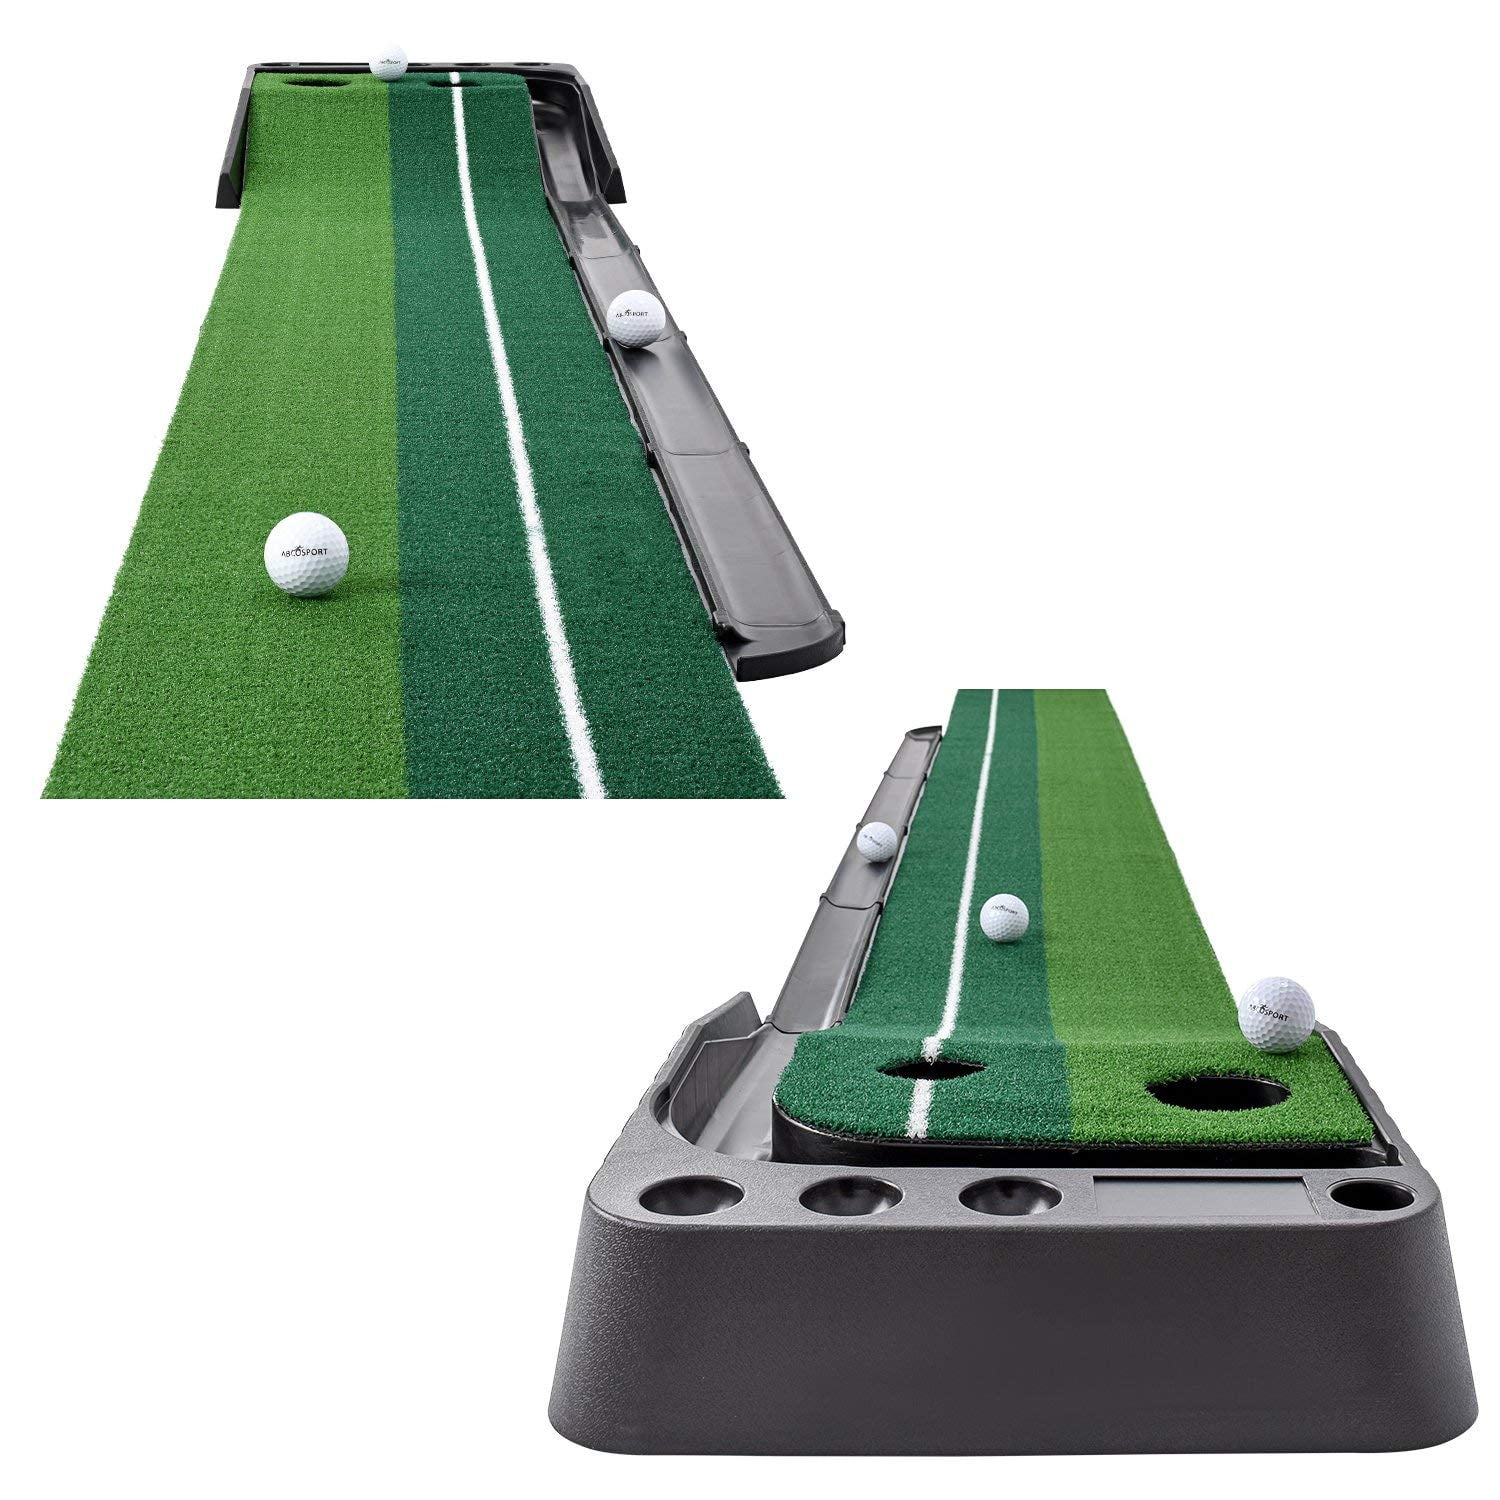 Abcosport Indoor Golf Putting Practice Mat – Auto Ball Return 